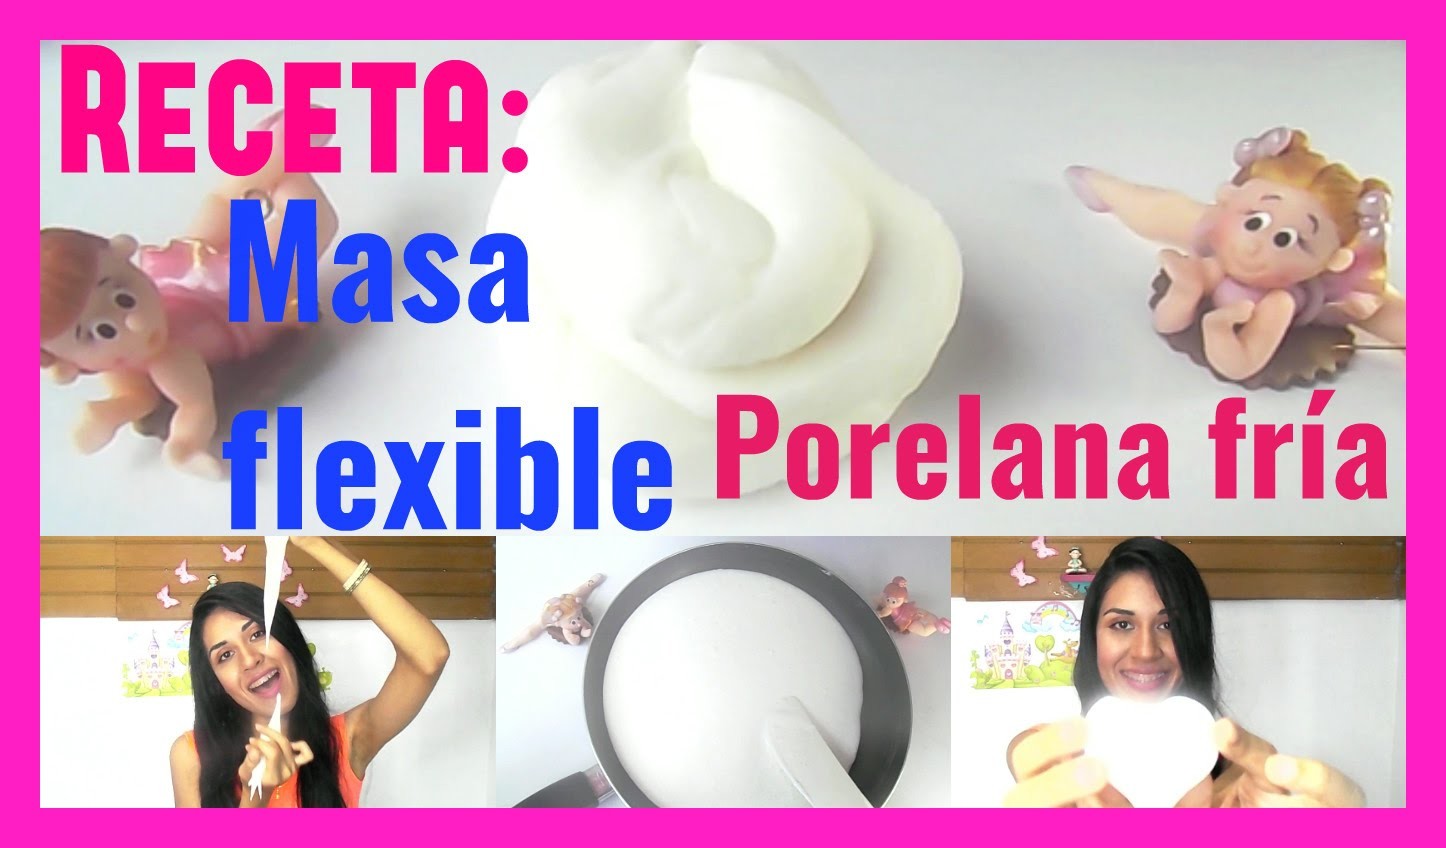 La mejor receta de masa flexible (Porcelana fría) | ♥L.C.M ♥